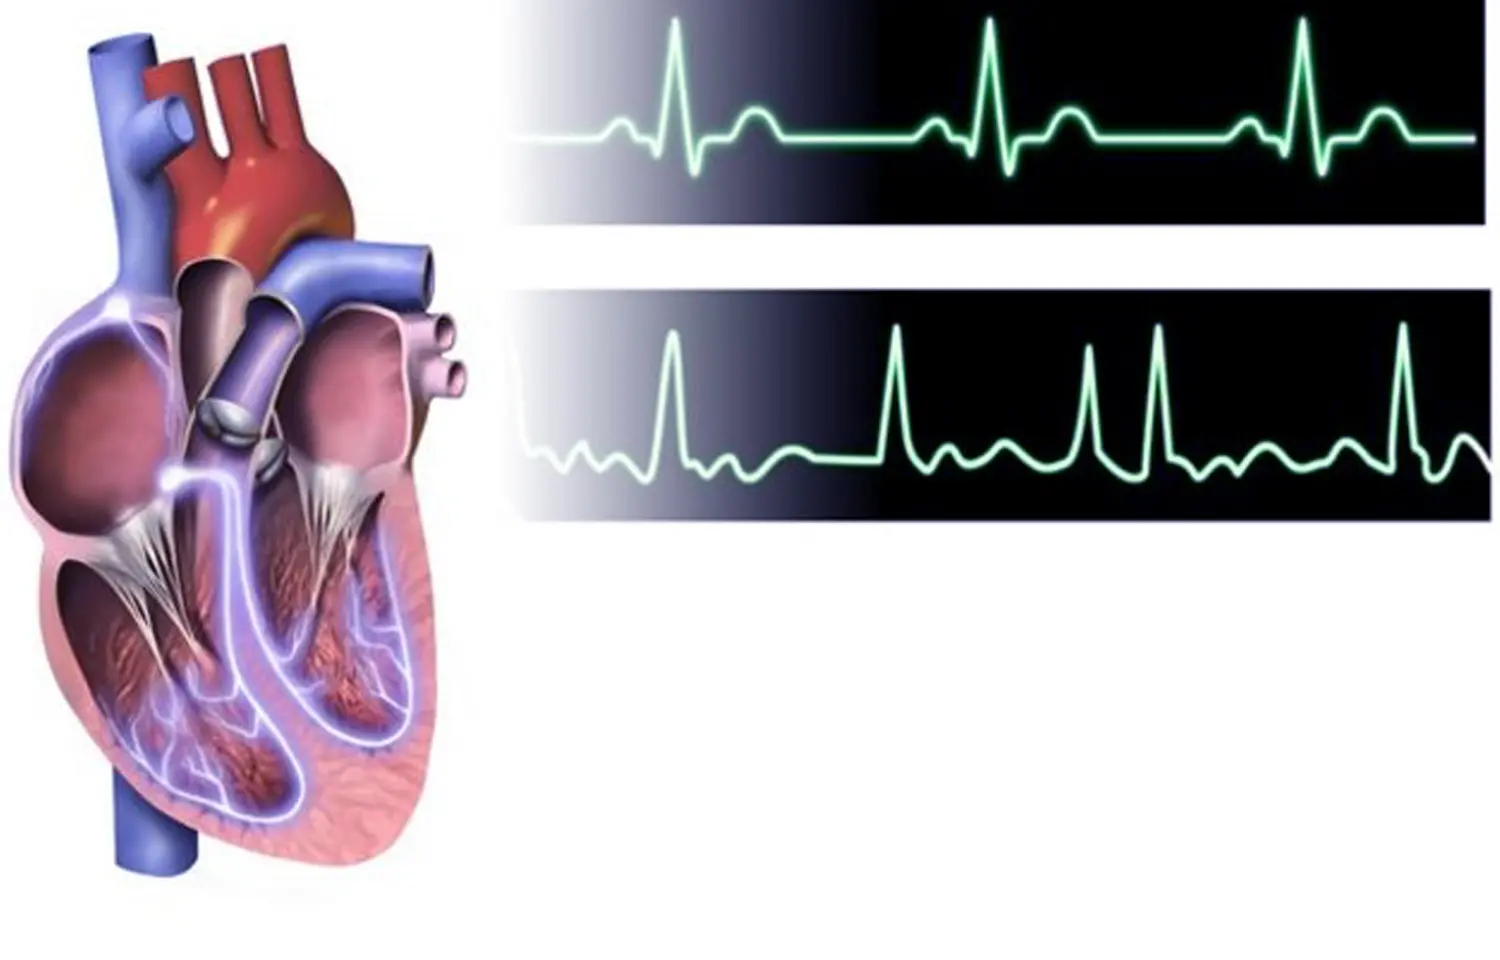 Mavacamten improves cardiac structure and function in HCM: Study